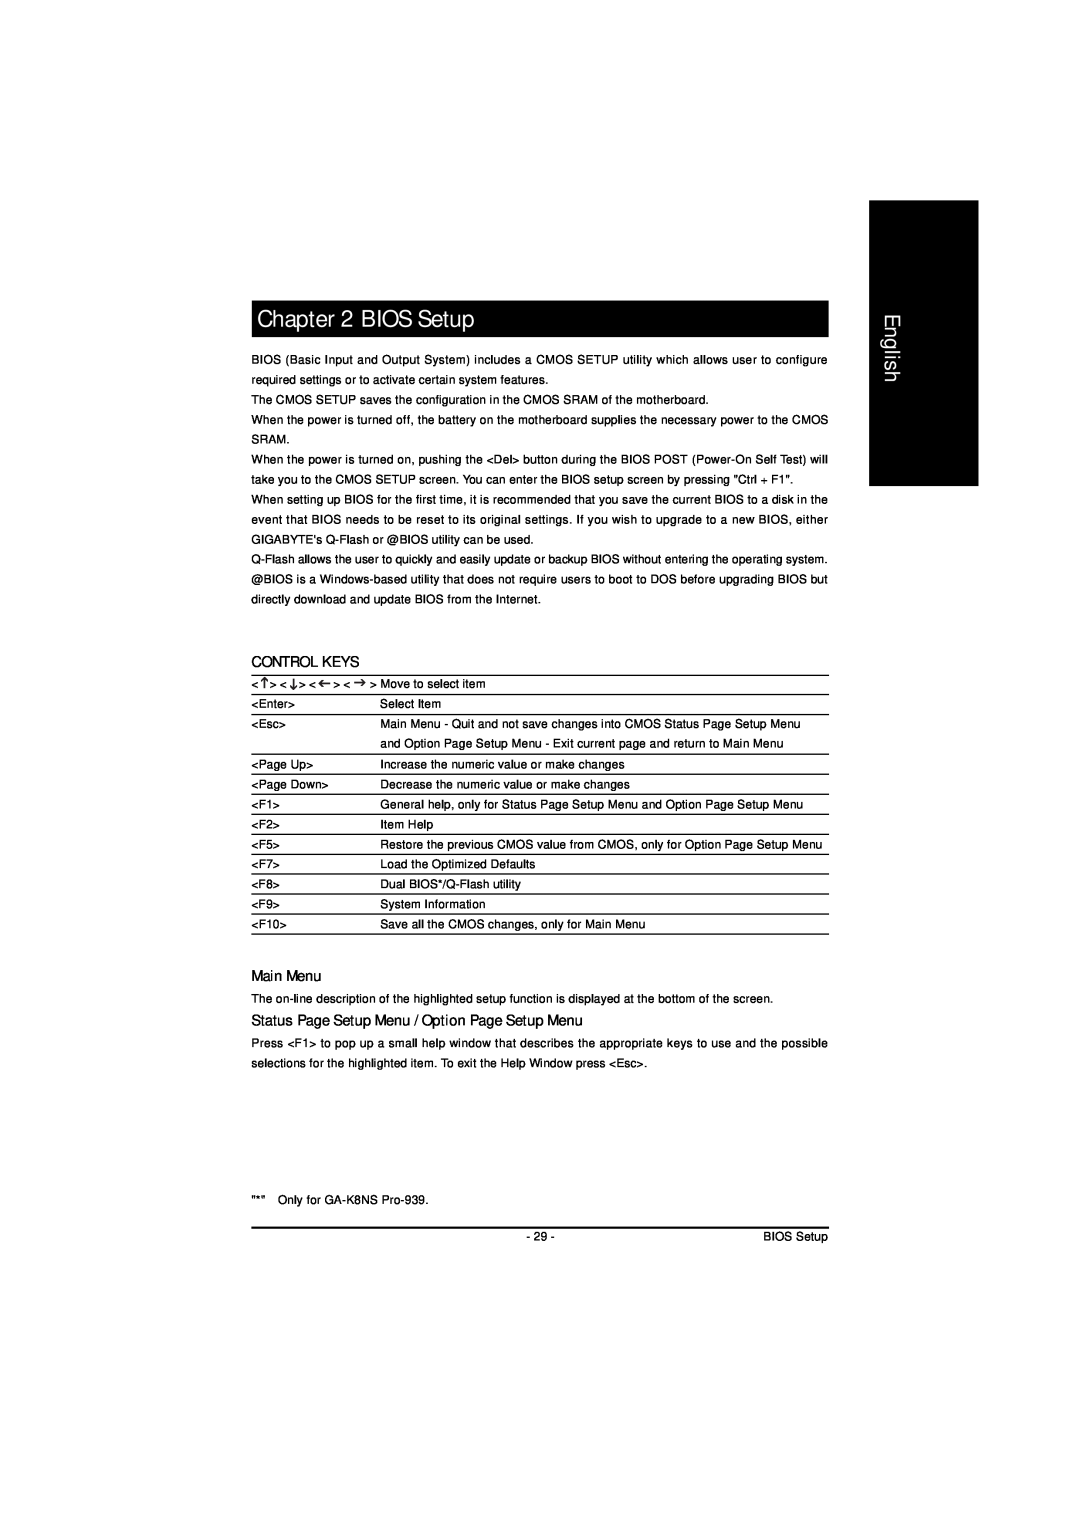 AMD GA-K8NS-939 user manual BIOS Setup, Control Keys, Main Menu, Status Page Setup Menu / Option Page Setup Menu, English 